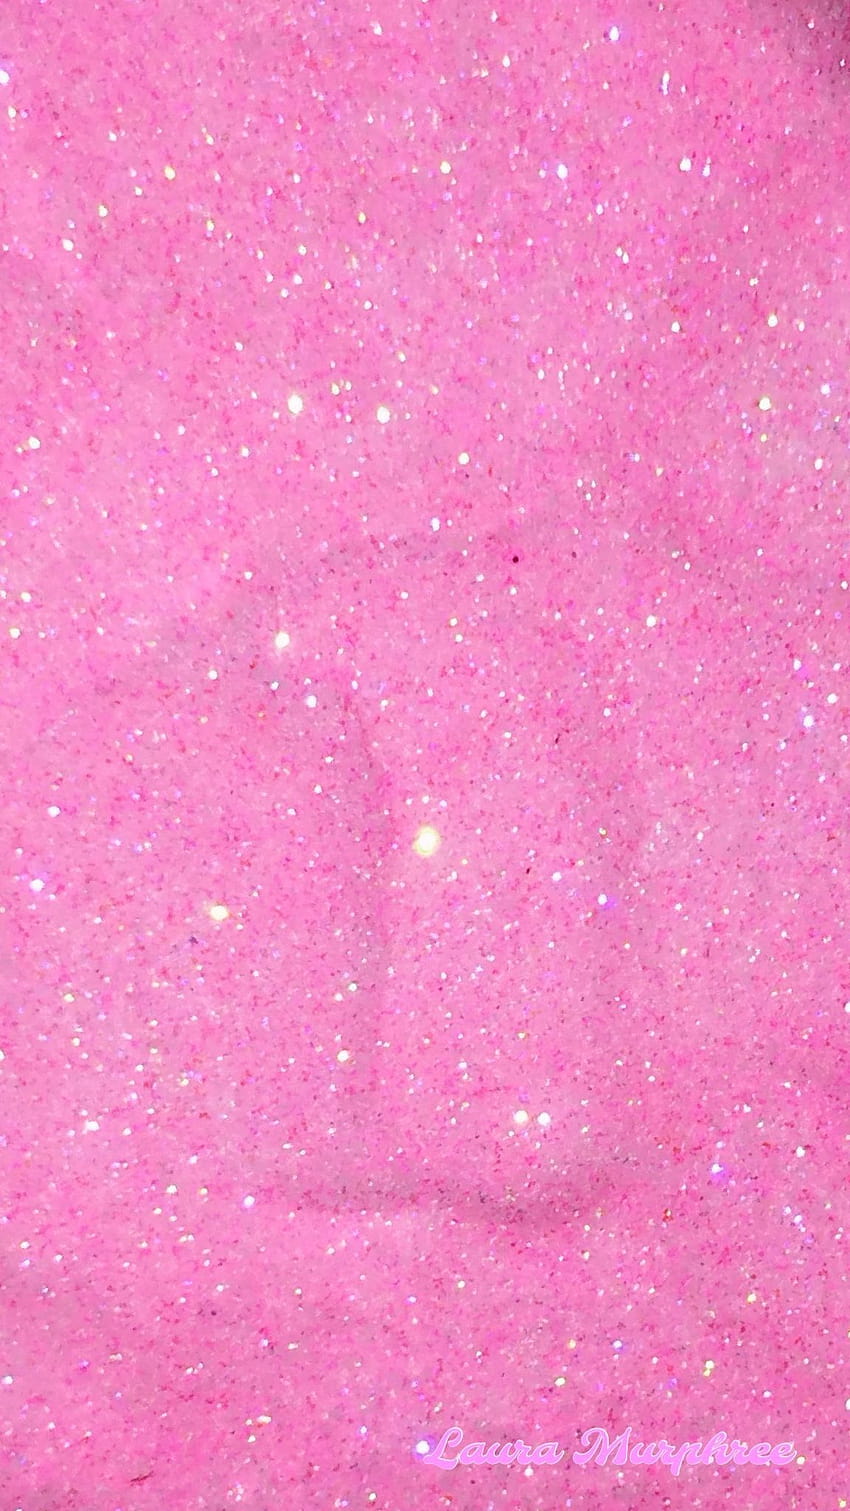 1152x2048, Glitter Pastel Pink Sparkle Backgrounds, glittery pink HD phone wallpaper